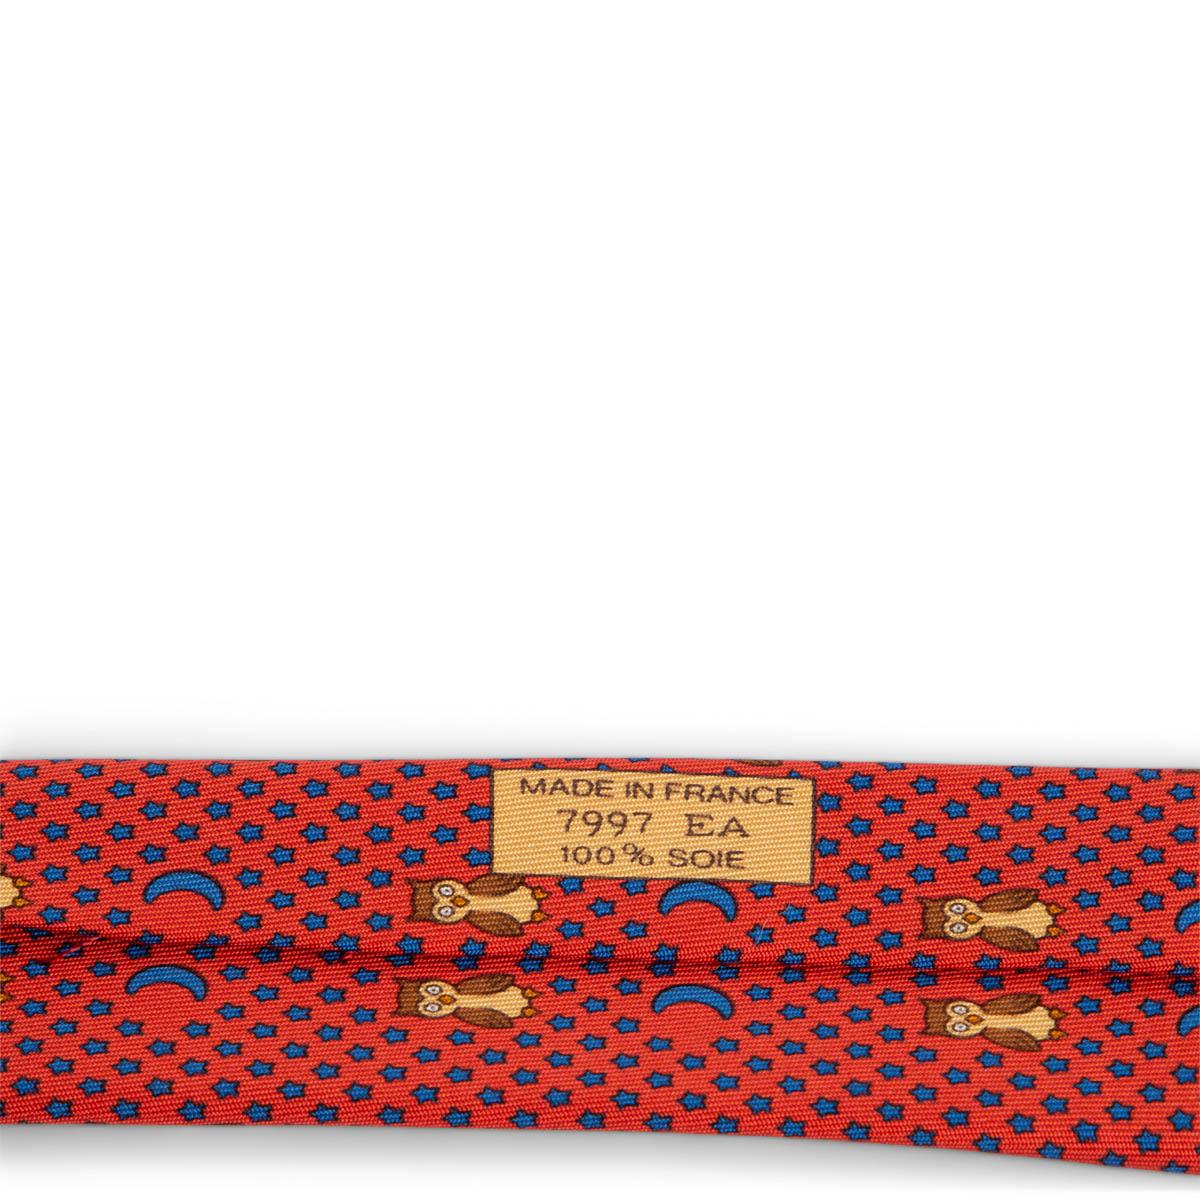 Women's HERMES orange silk twill 7997 NIGHT OWL Tie For Sale